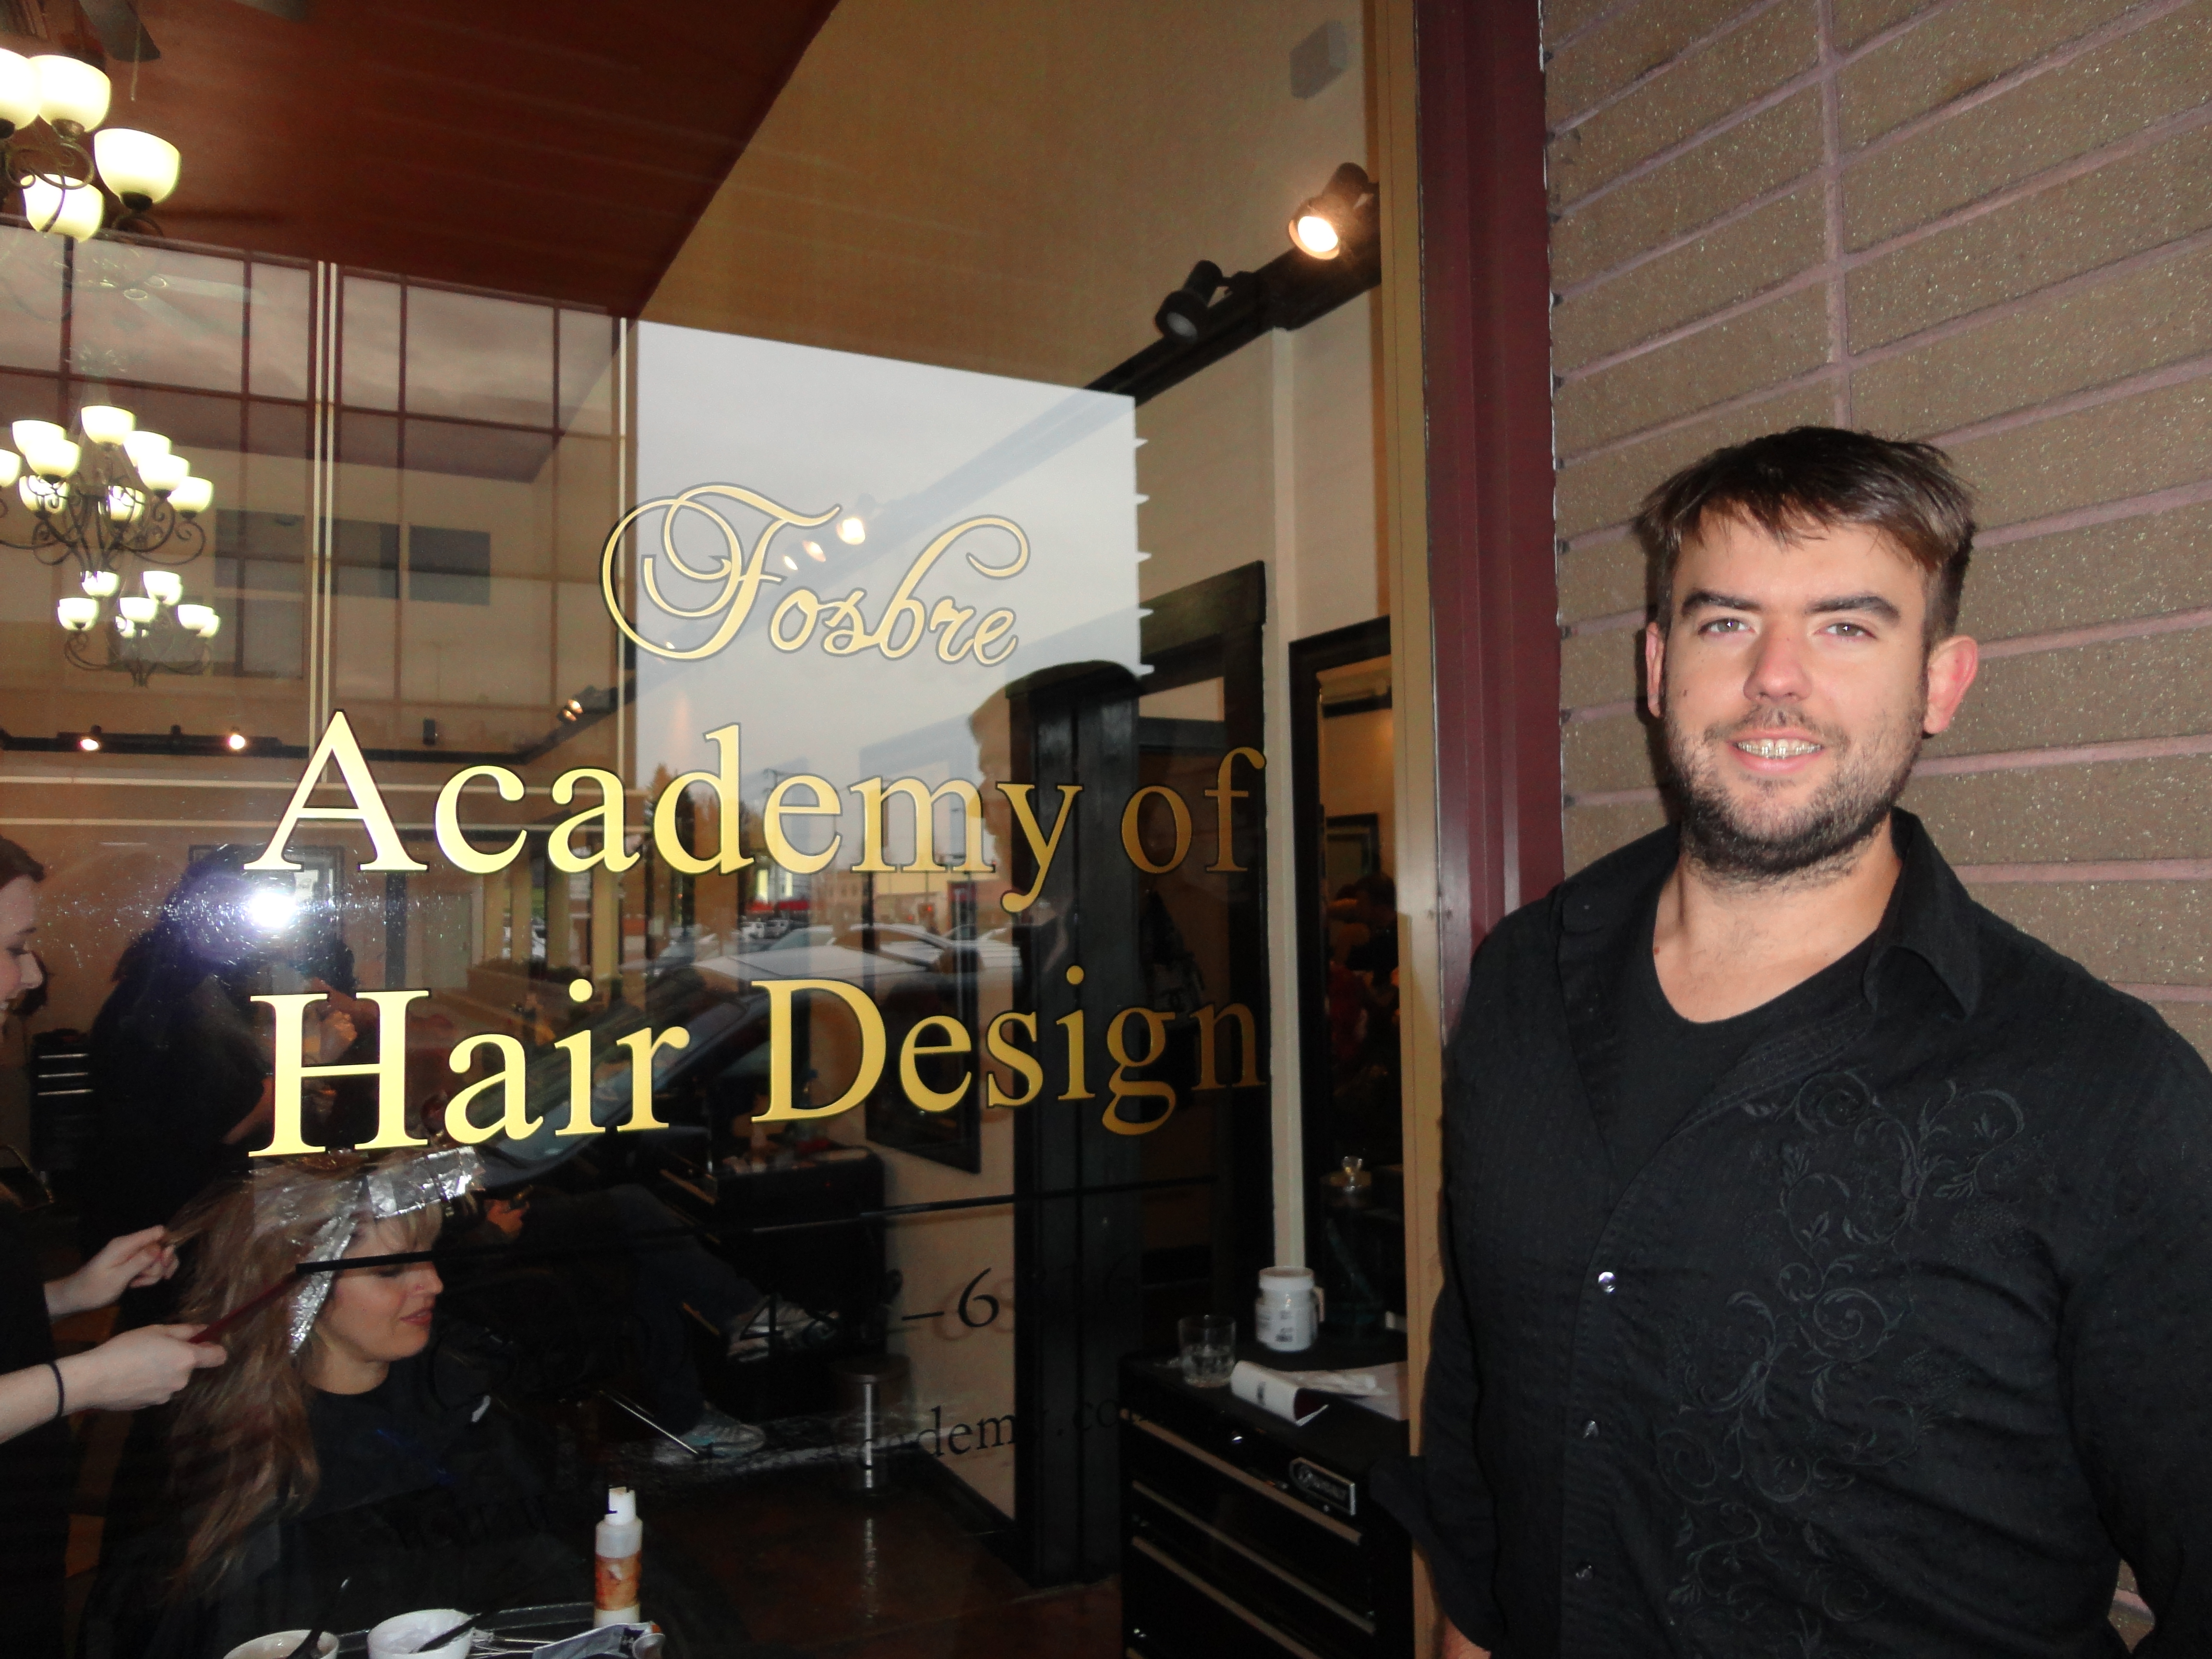 Fosbre Academy Of Hair Design: Preparing Students For Success - ThurstonTalk